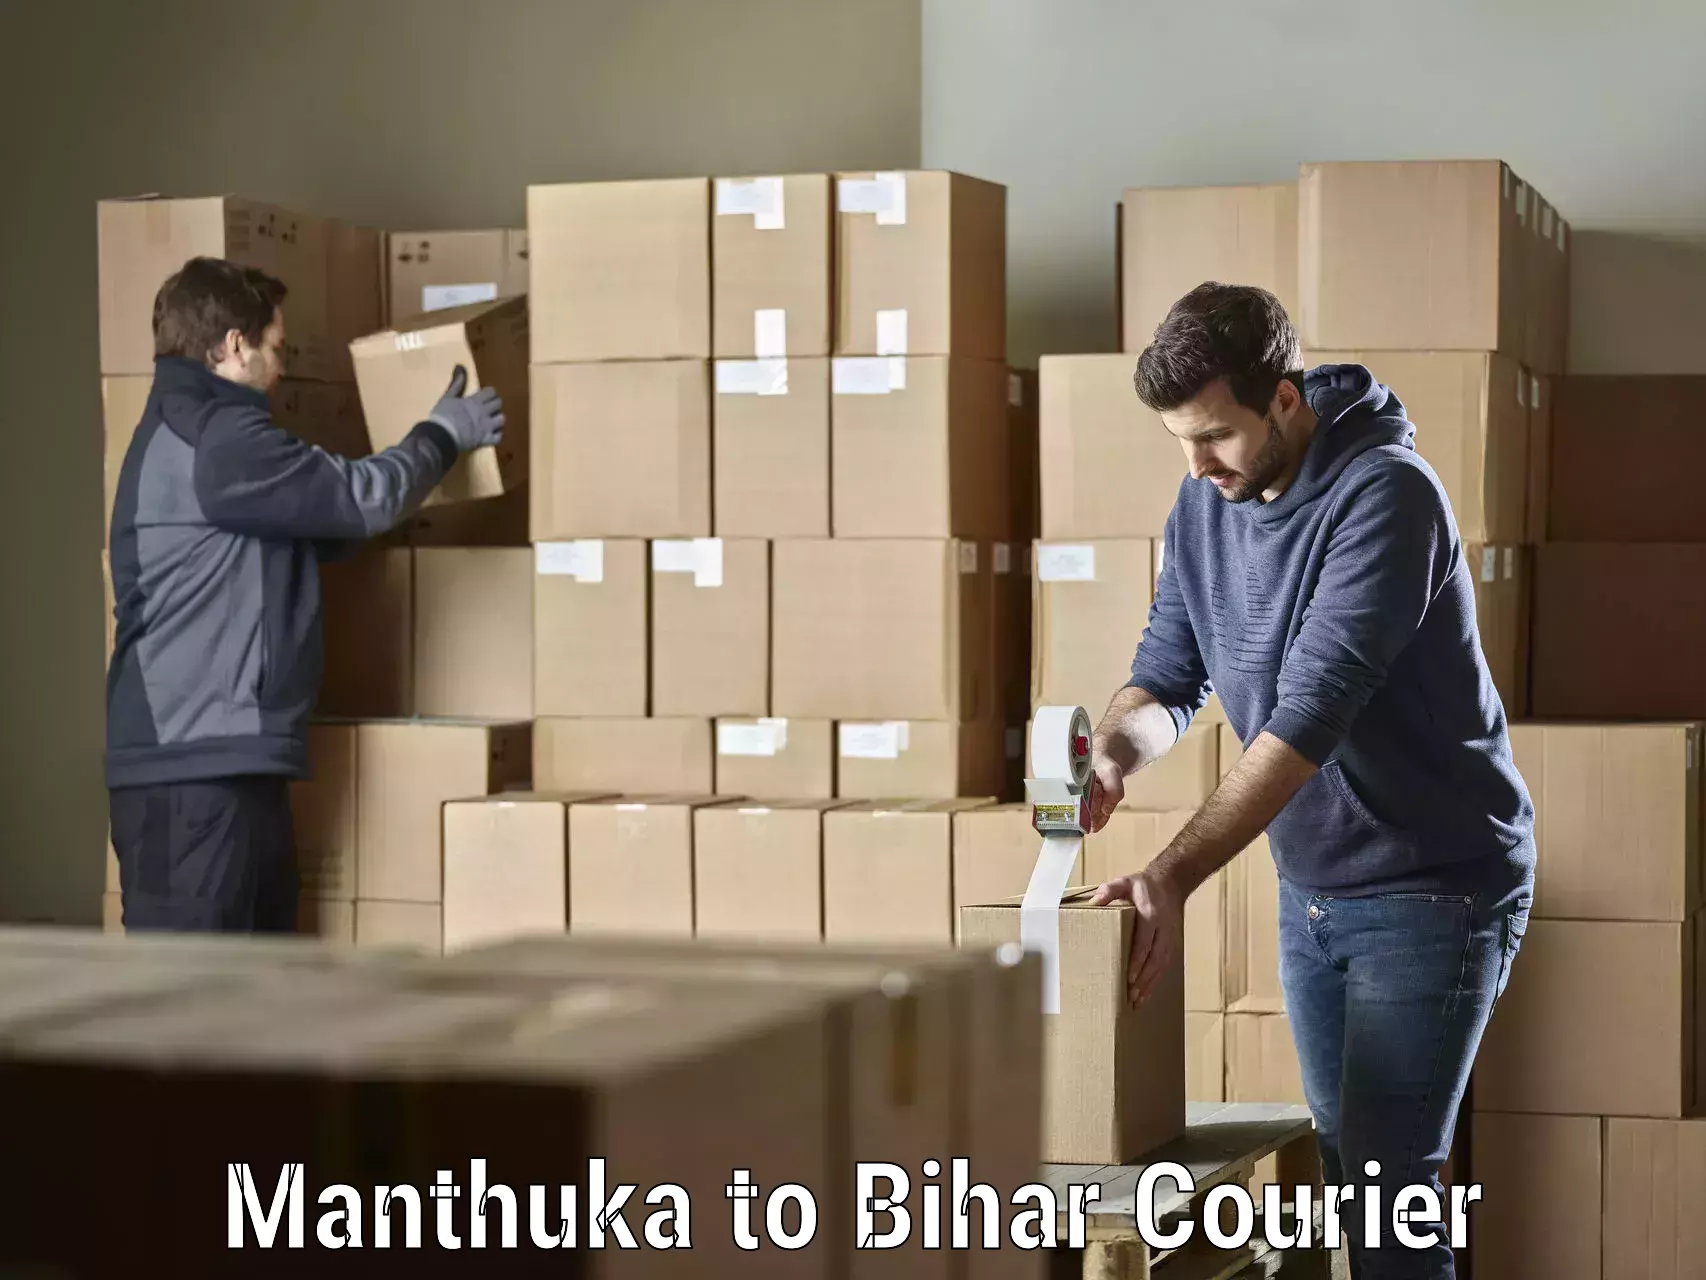 Courier service comparison in Manthuka to Bihar